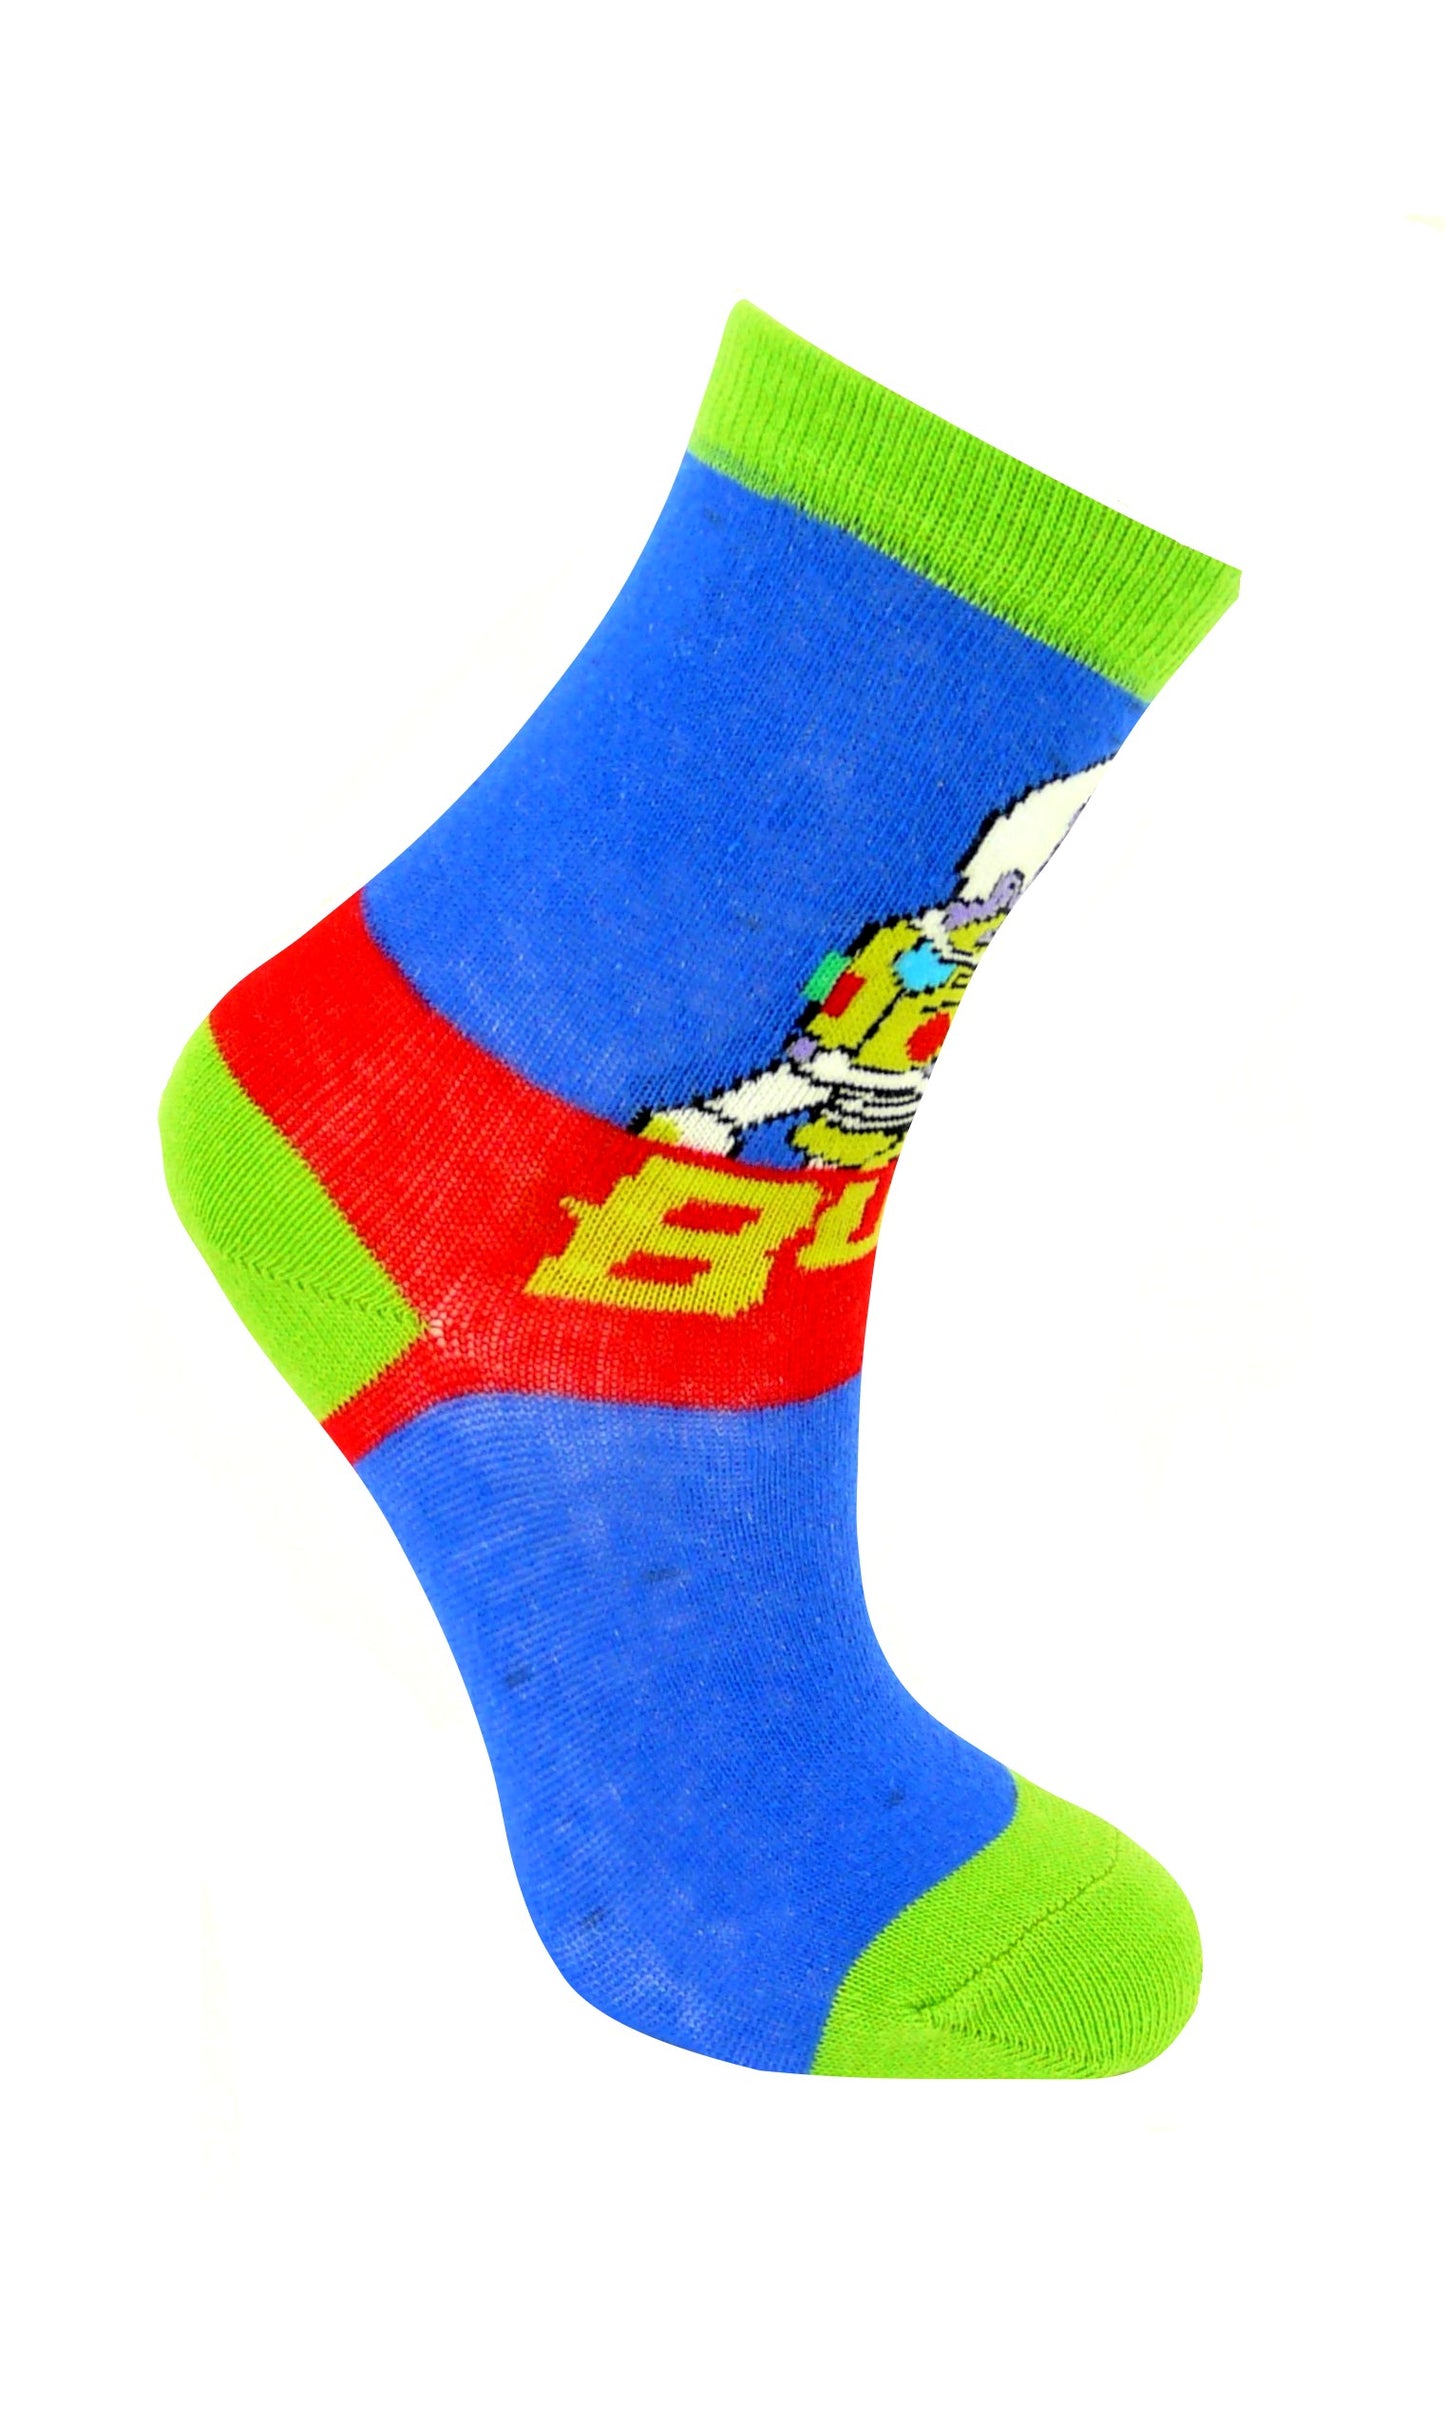 Boys Buzz Lightyear 5 pair Socks UK Size 9-12